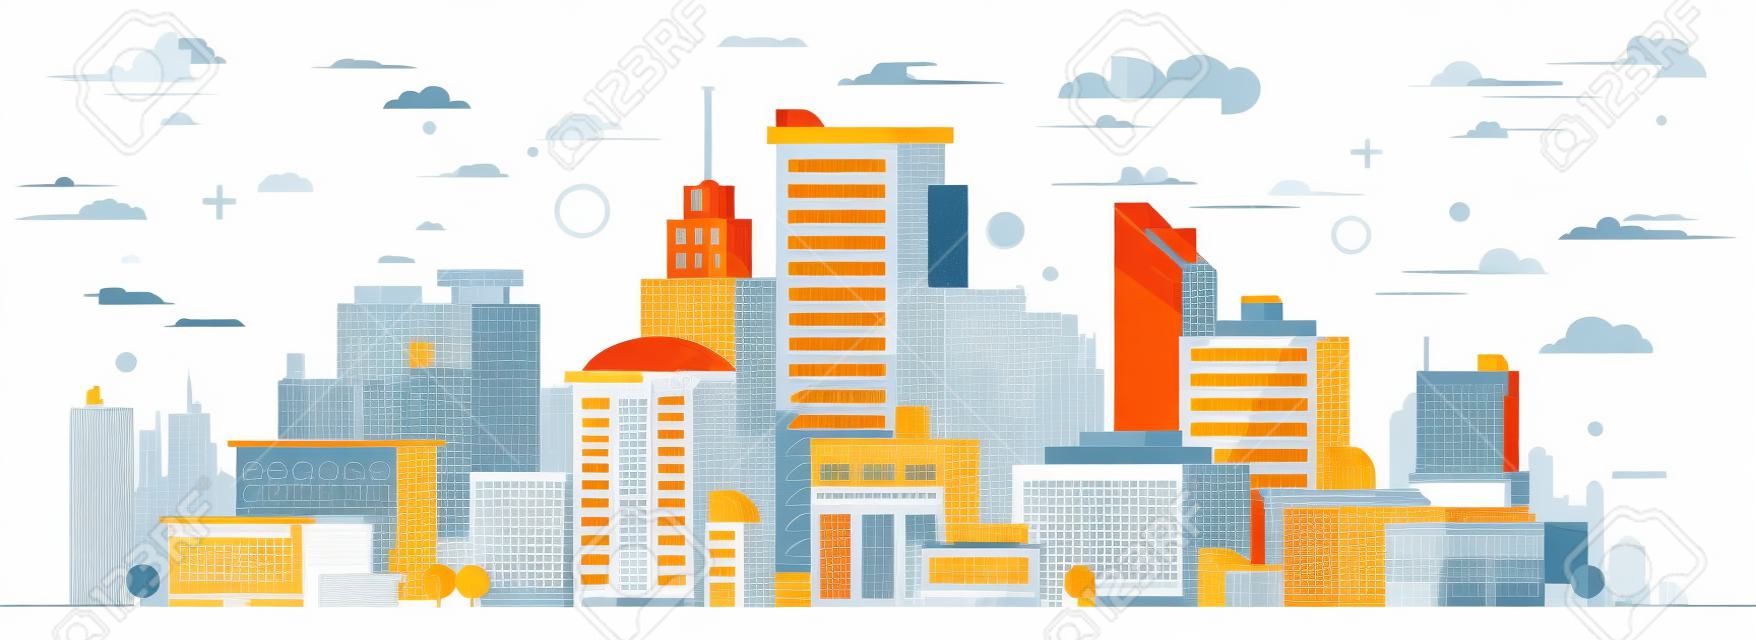 Stad illustratie. Torens en gebouwen in moderne platte stijl op witte achtergrond